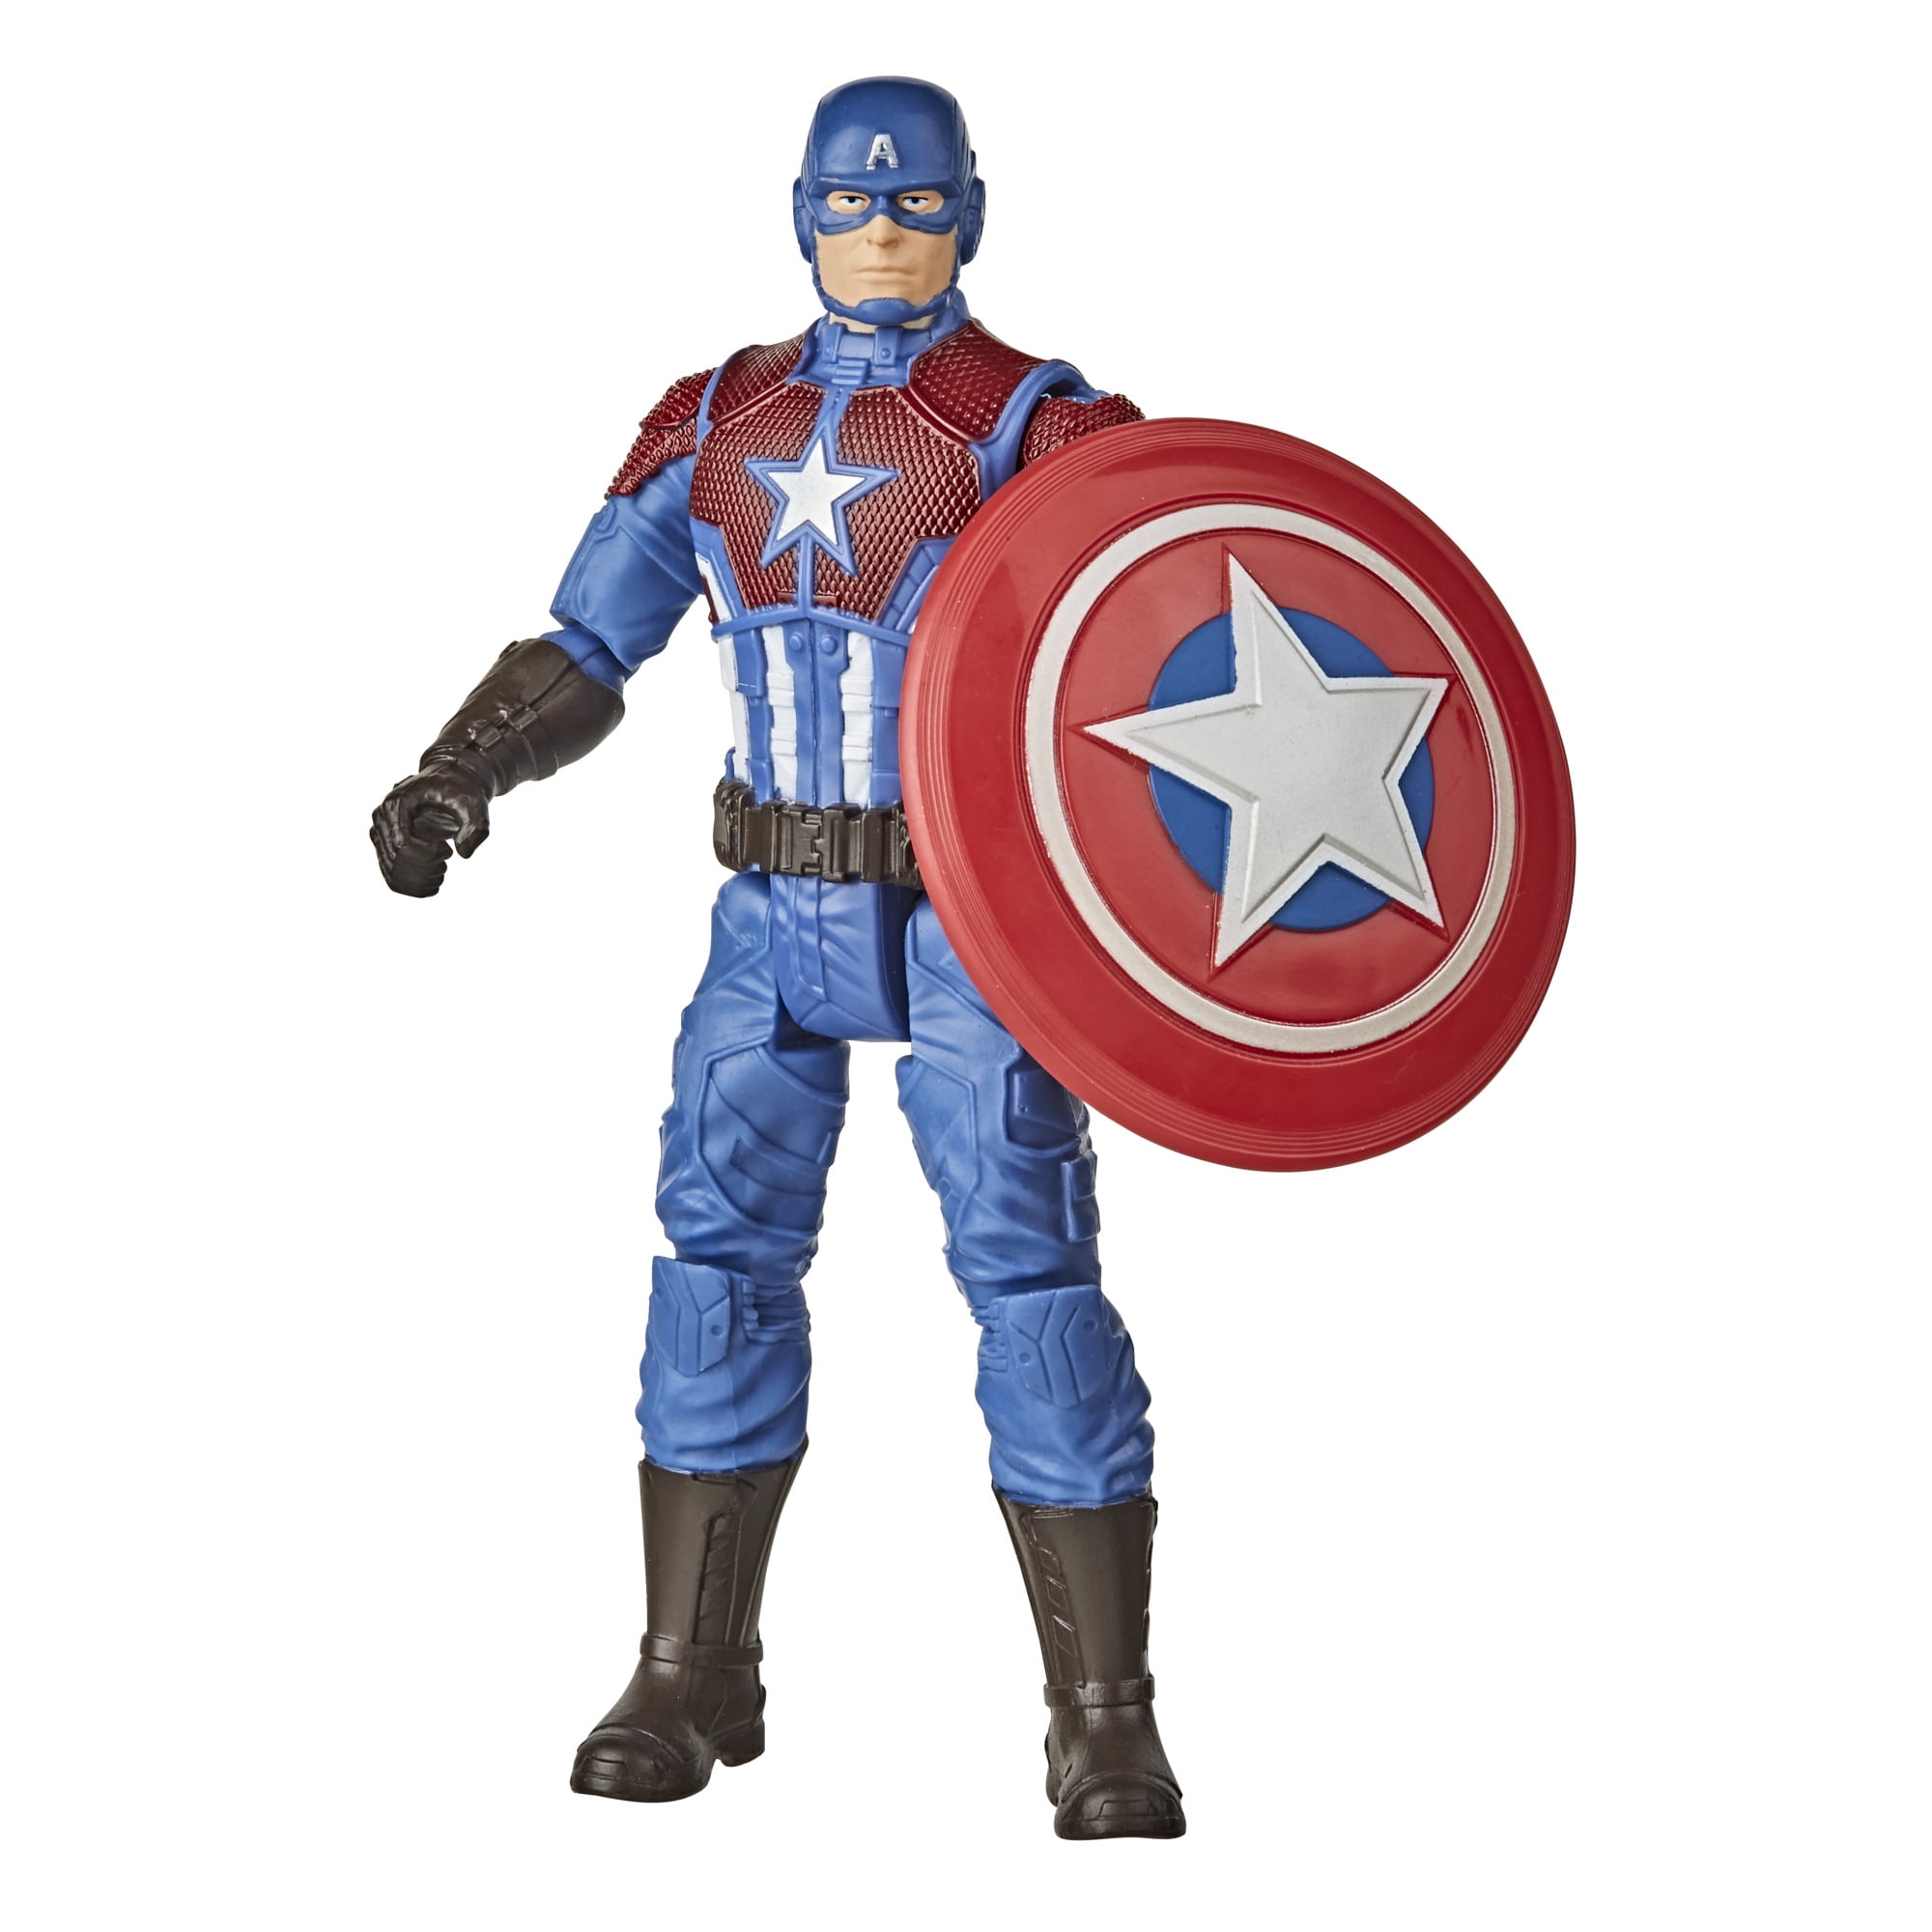 Batman Hulk Capt America,6 pcs/10.5cm Thor Action Figure,Avengers,Superhero